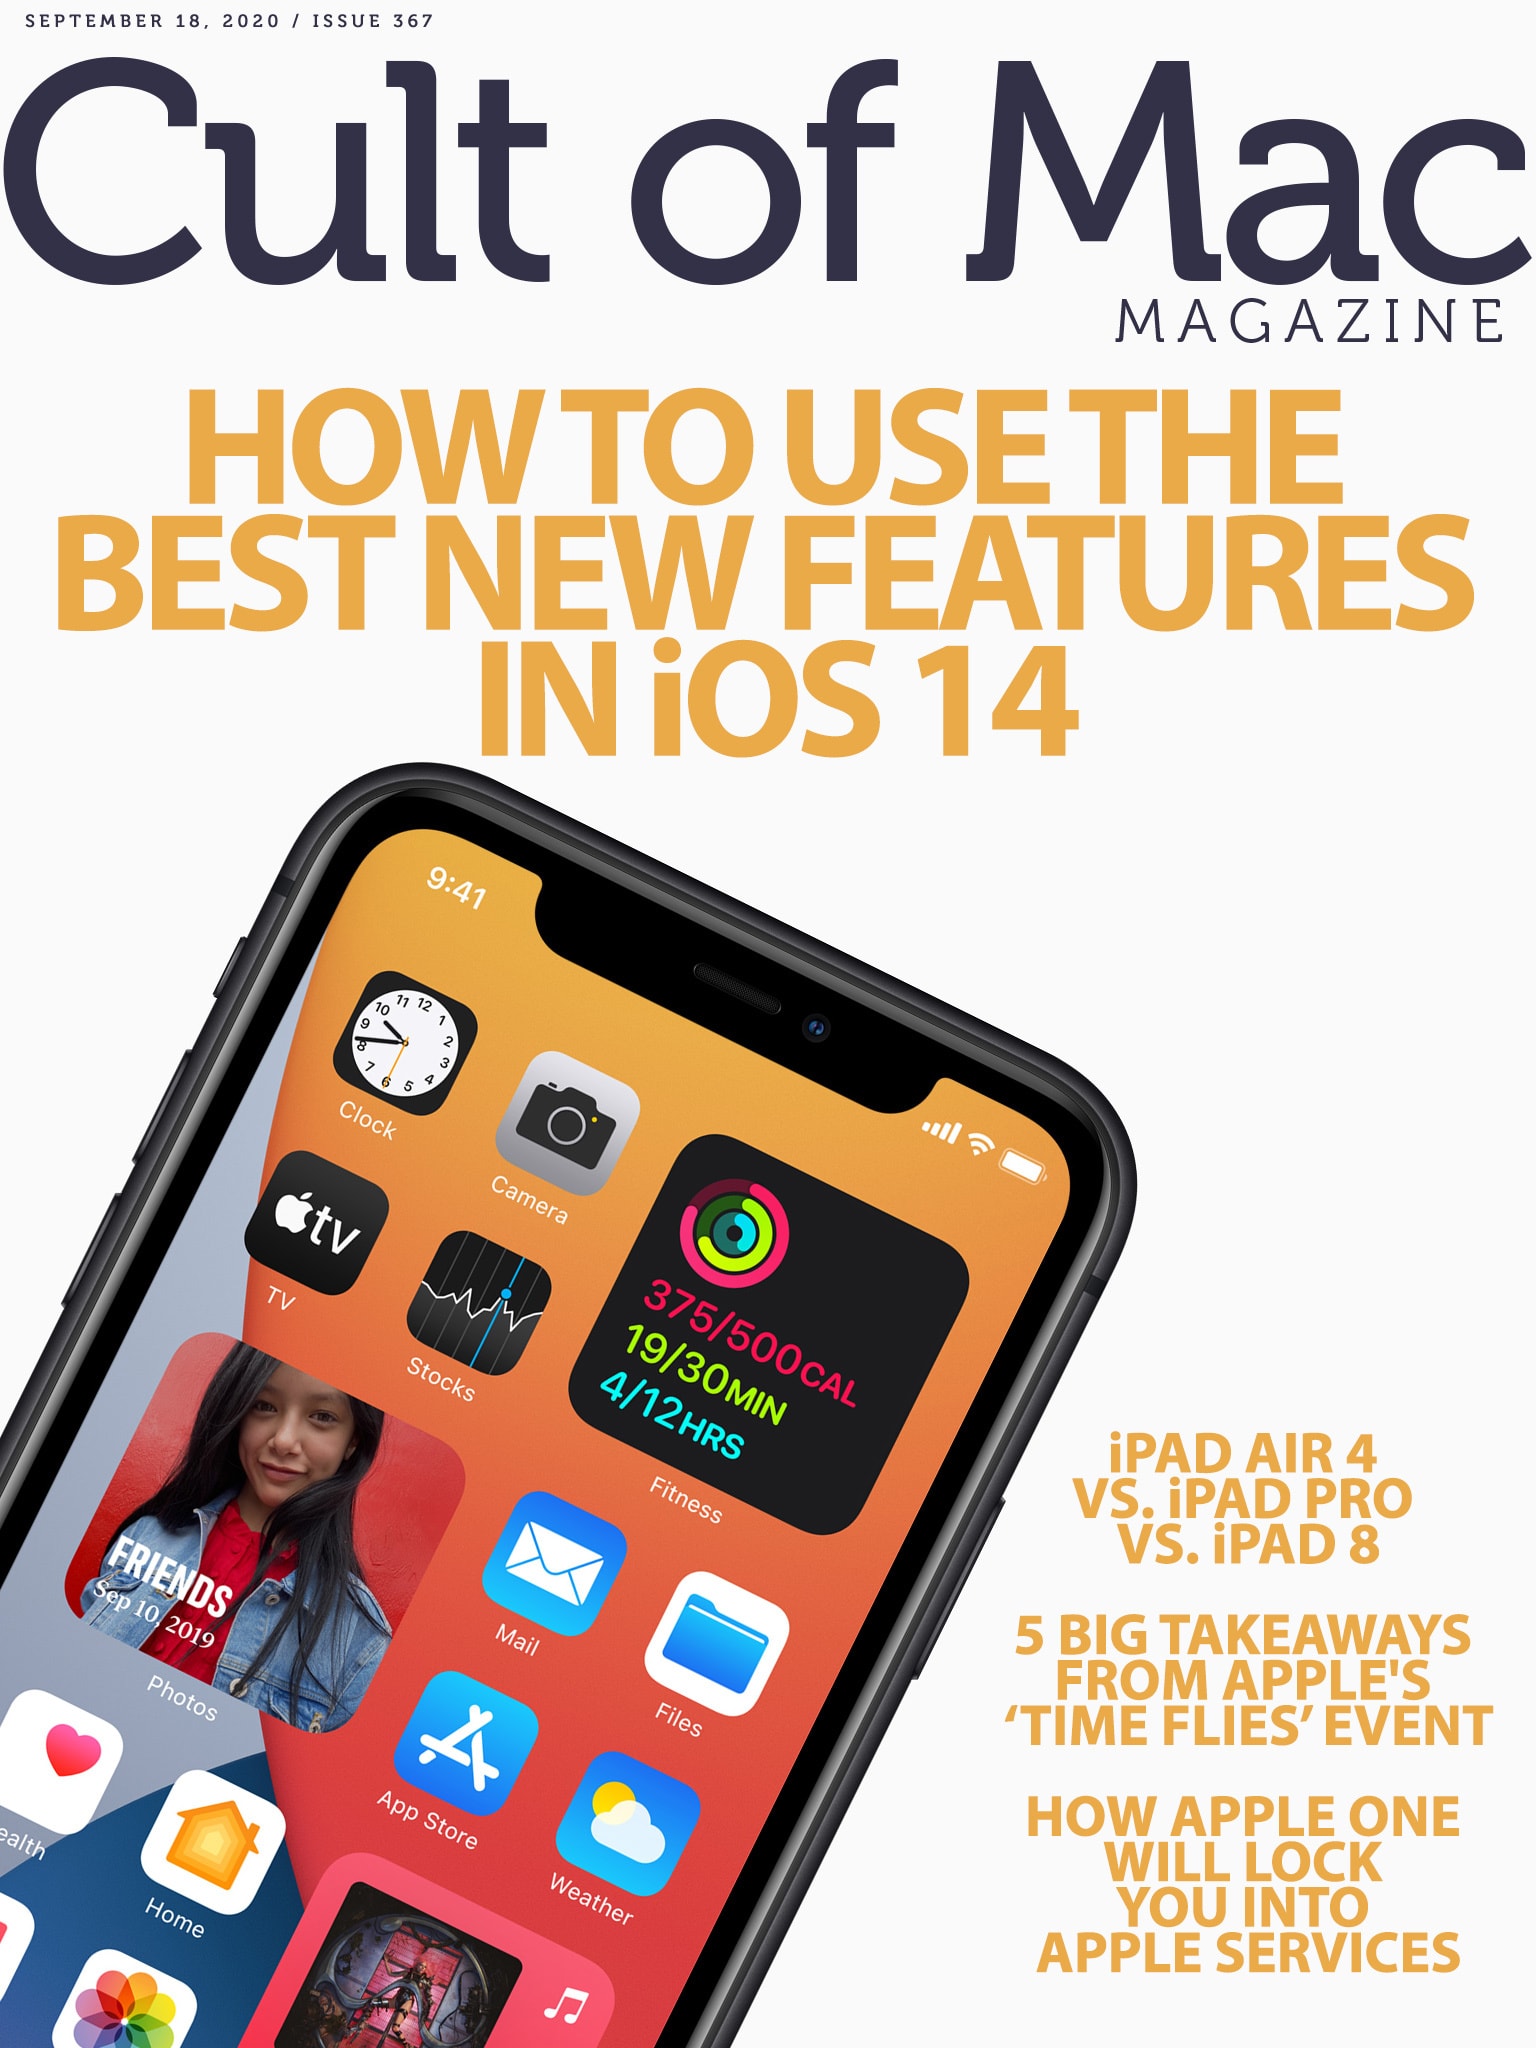 the latest ios for mac